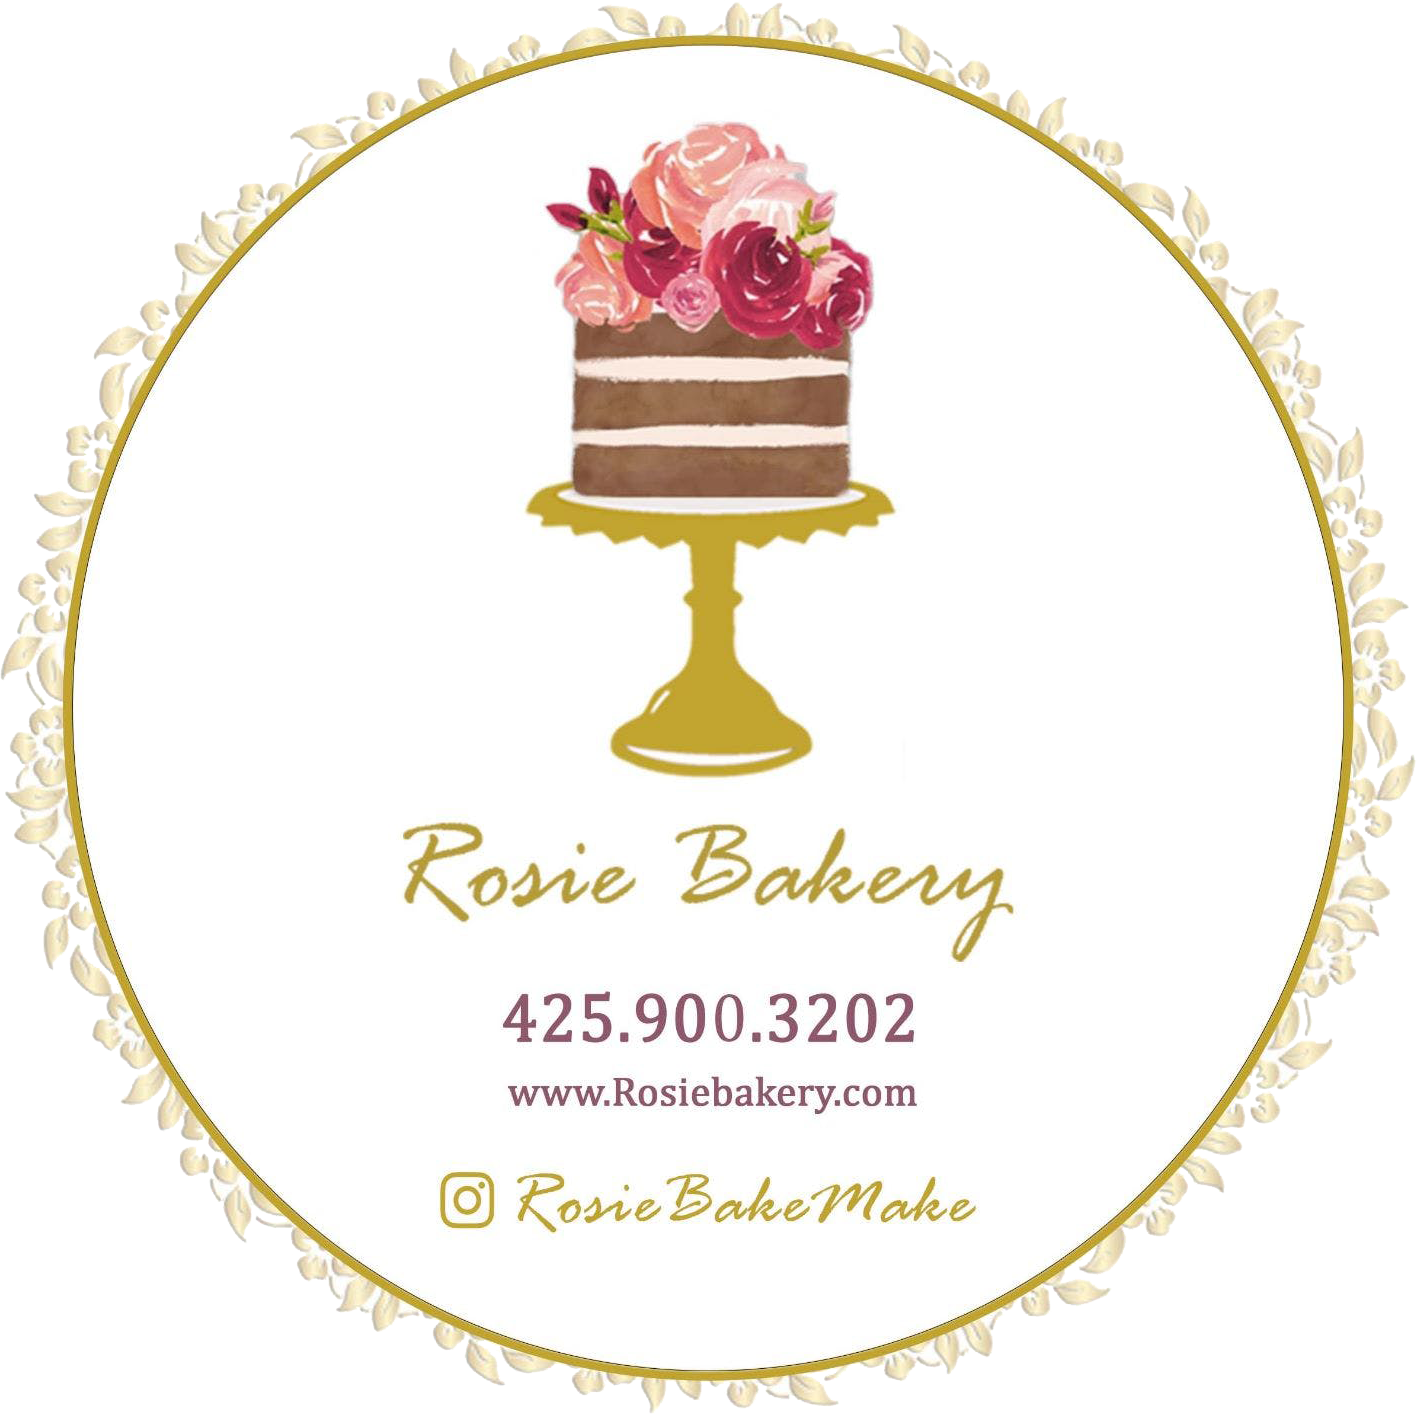 Rosie Bakery Home